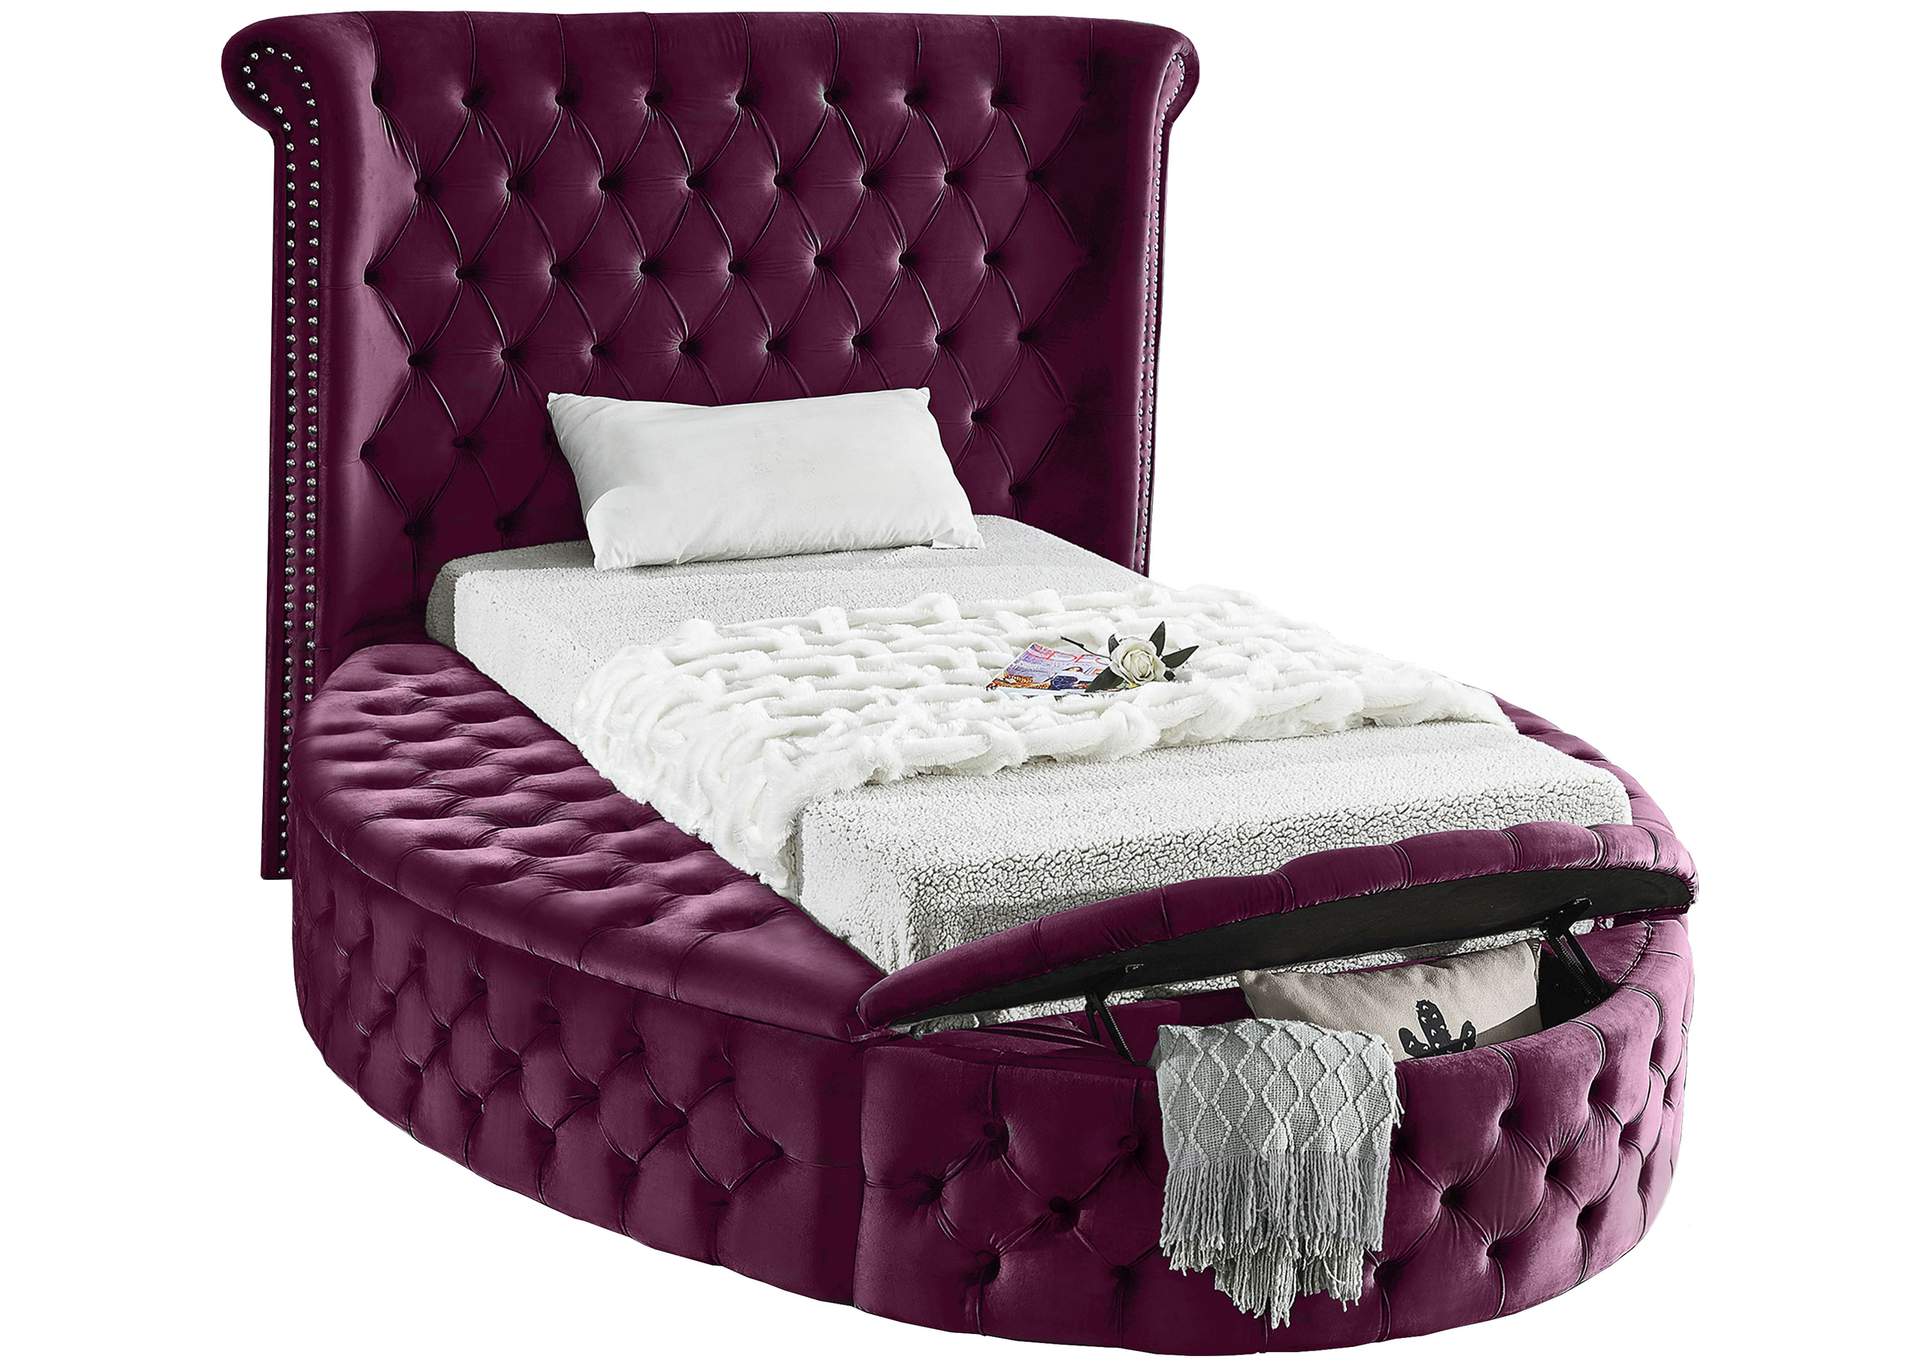 Luxus Purple Velvet Twin Bed Best, The Purple Bed King Size Mattress